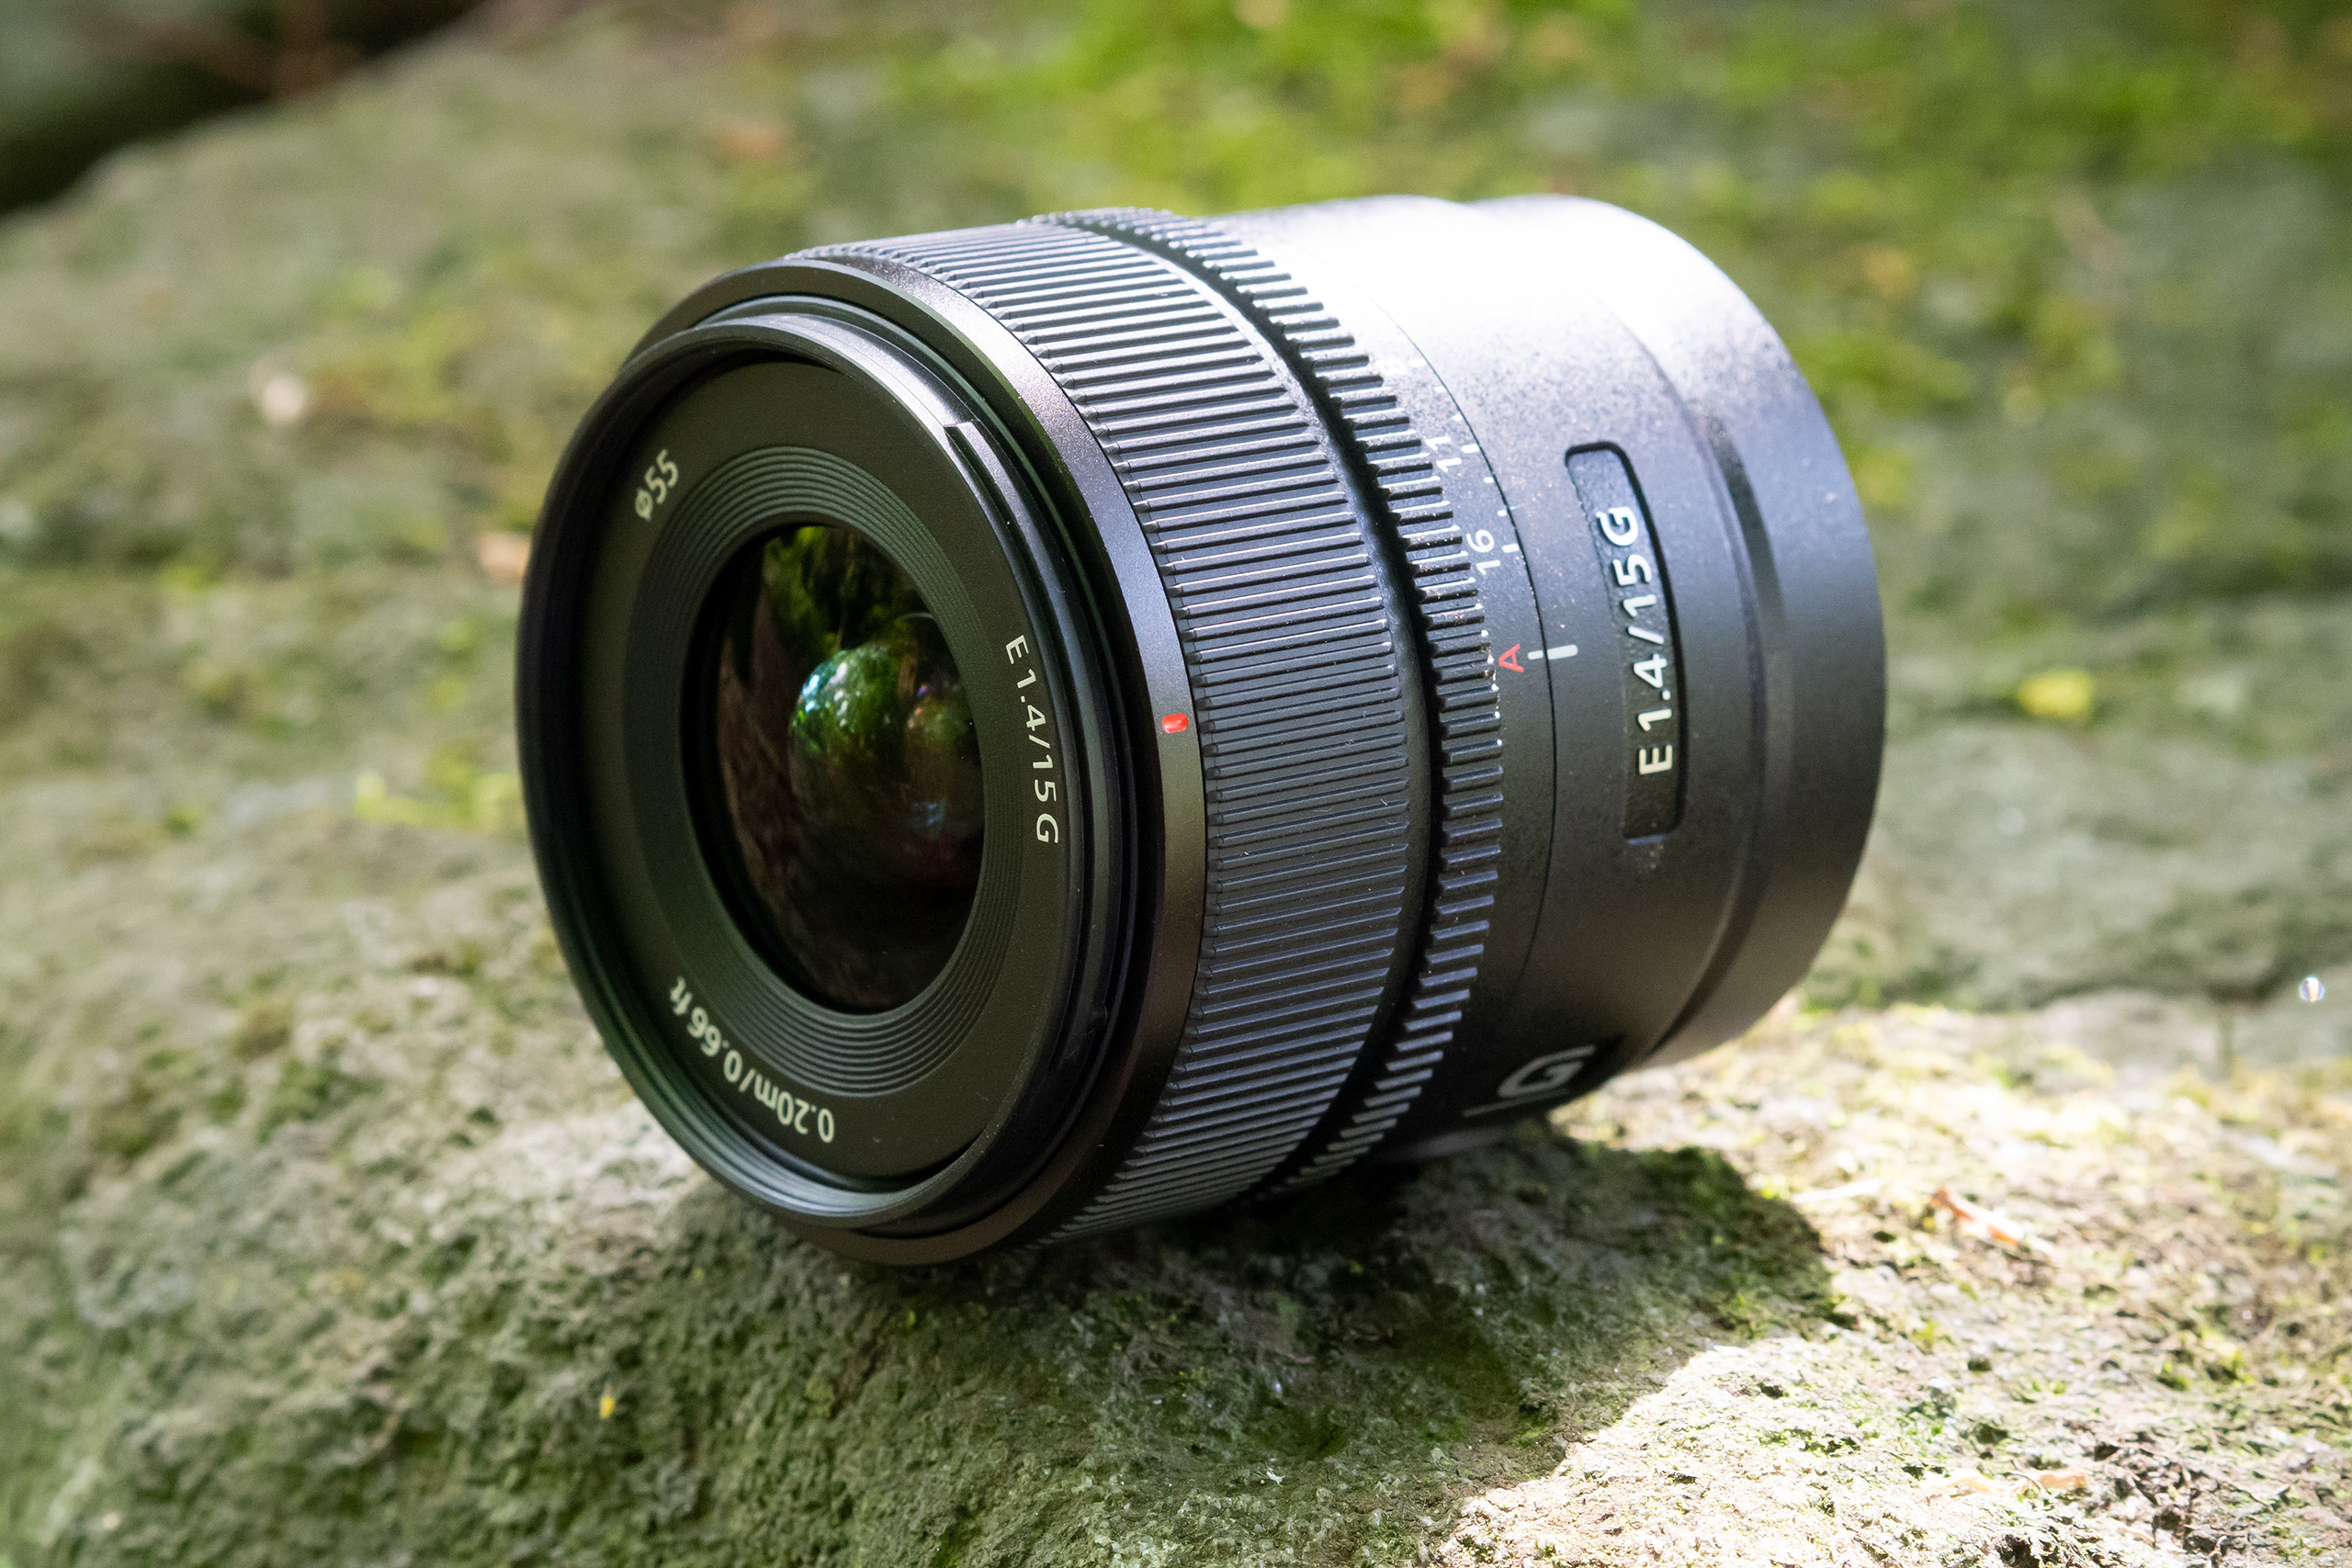 Sony E 15mm F1.4 G lens, angled view